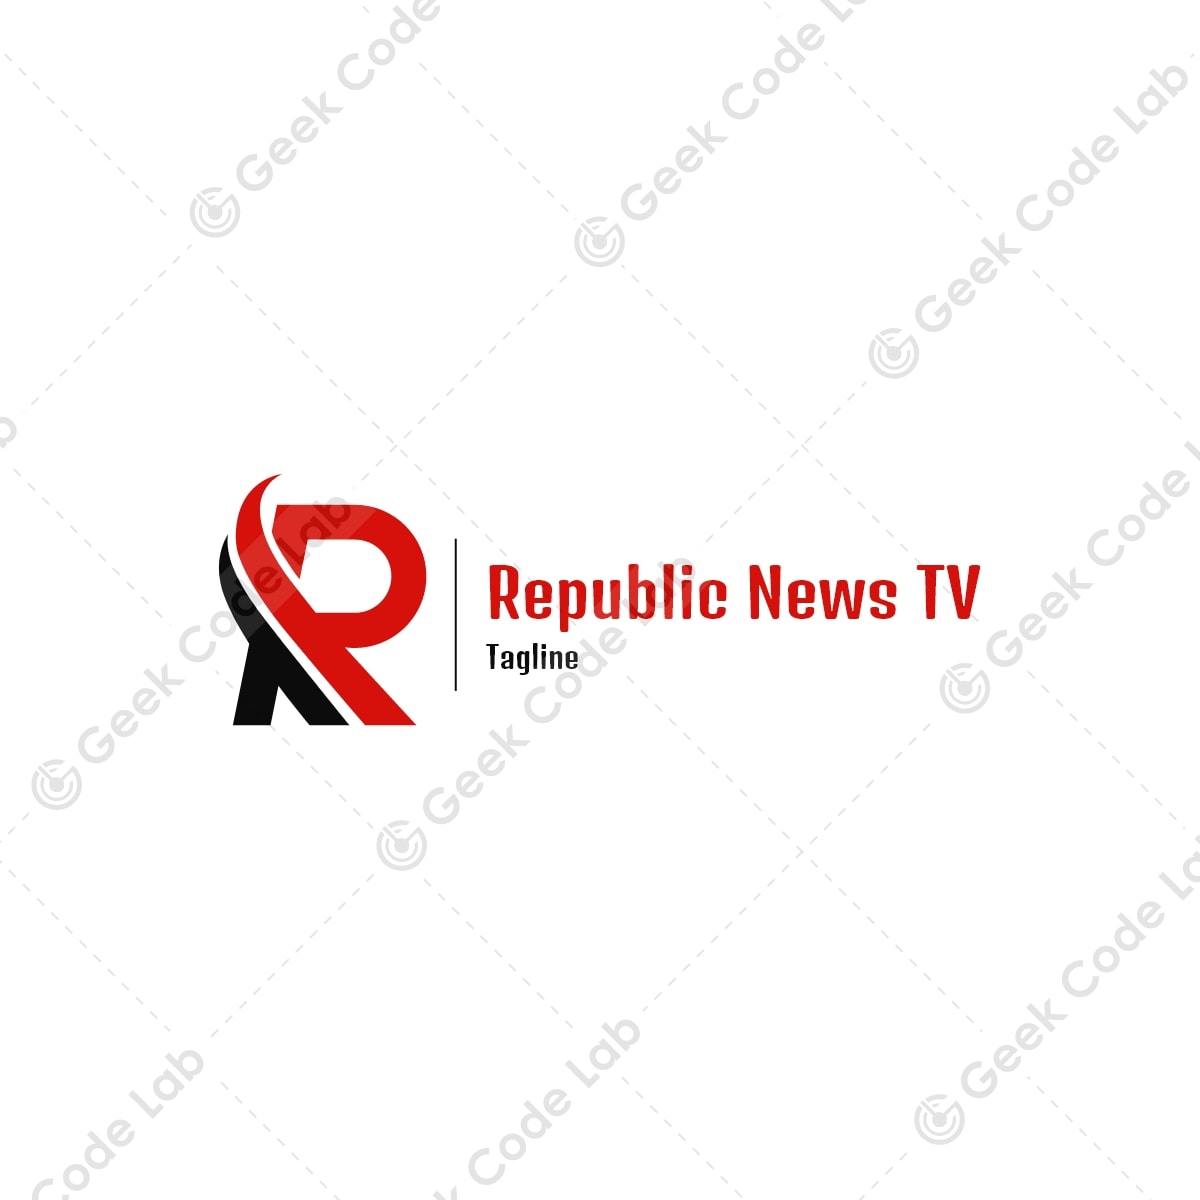 media republic Logo PNG Transparent & SVG Vector - Freebie Supply